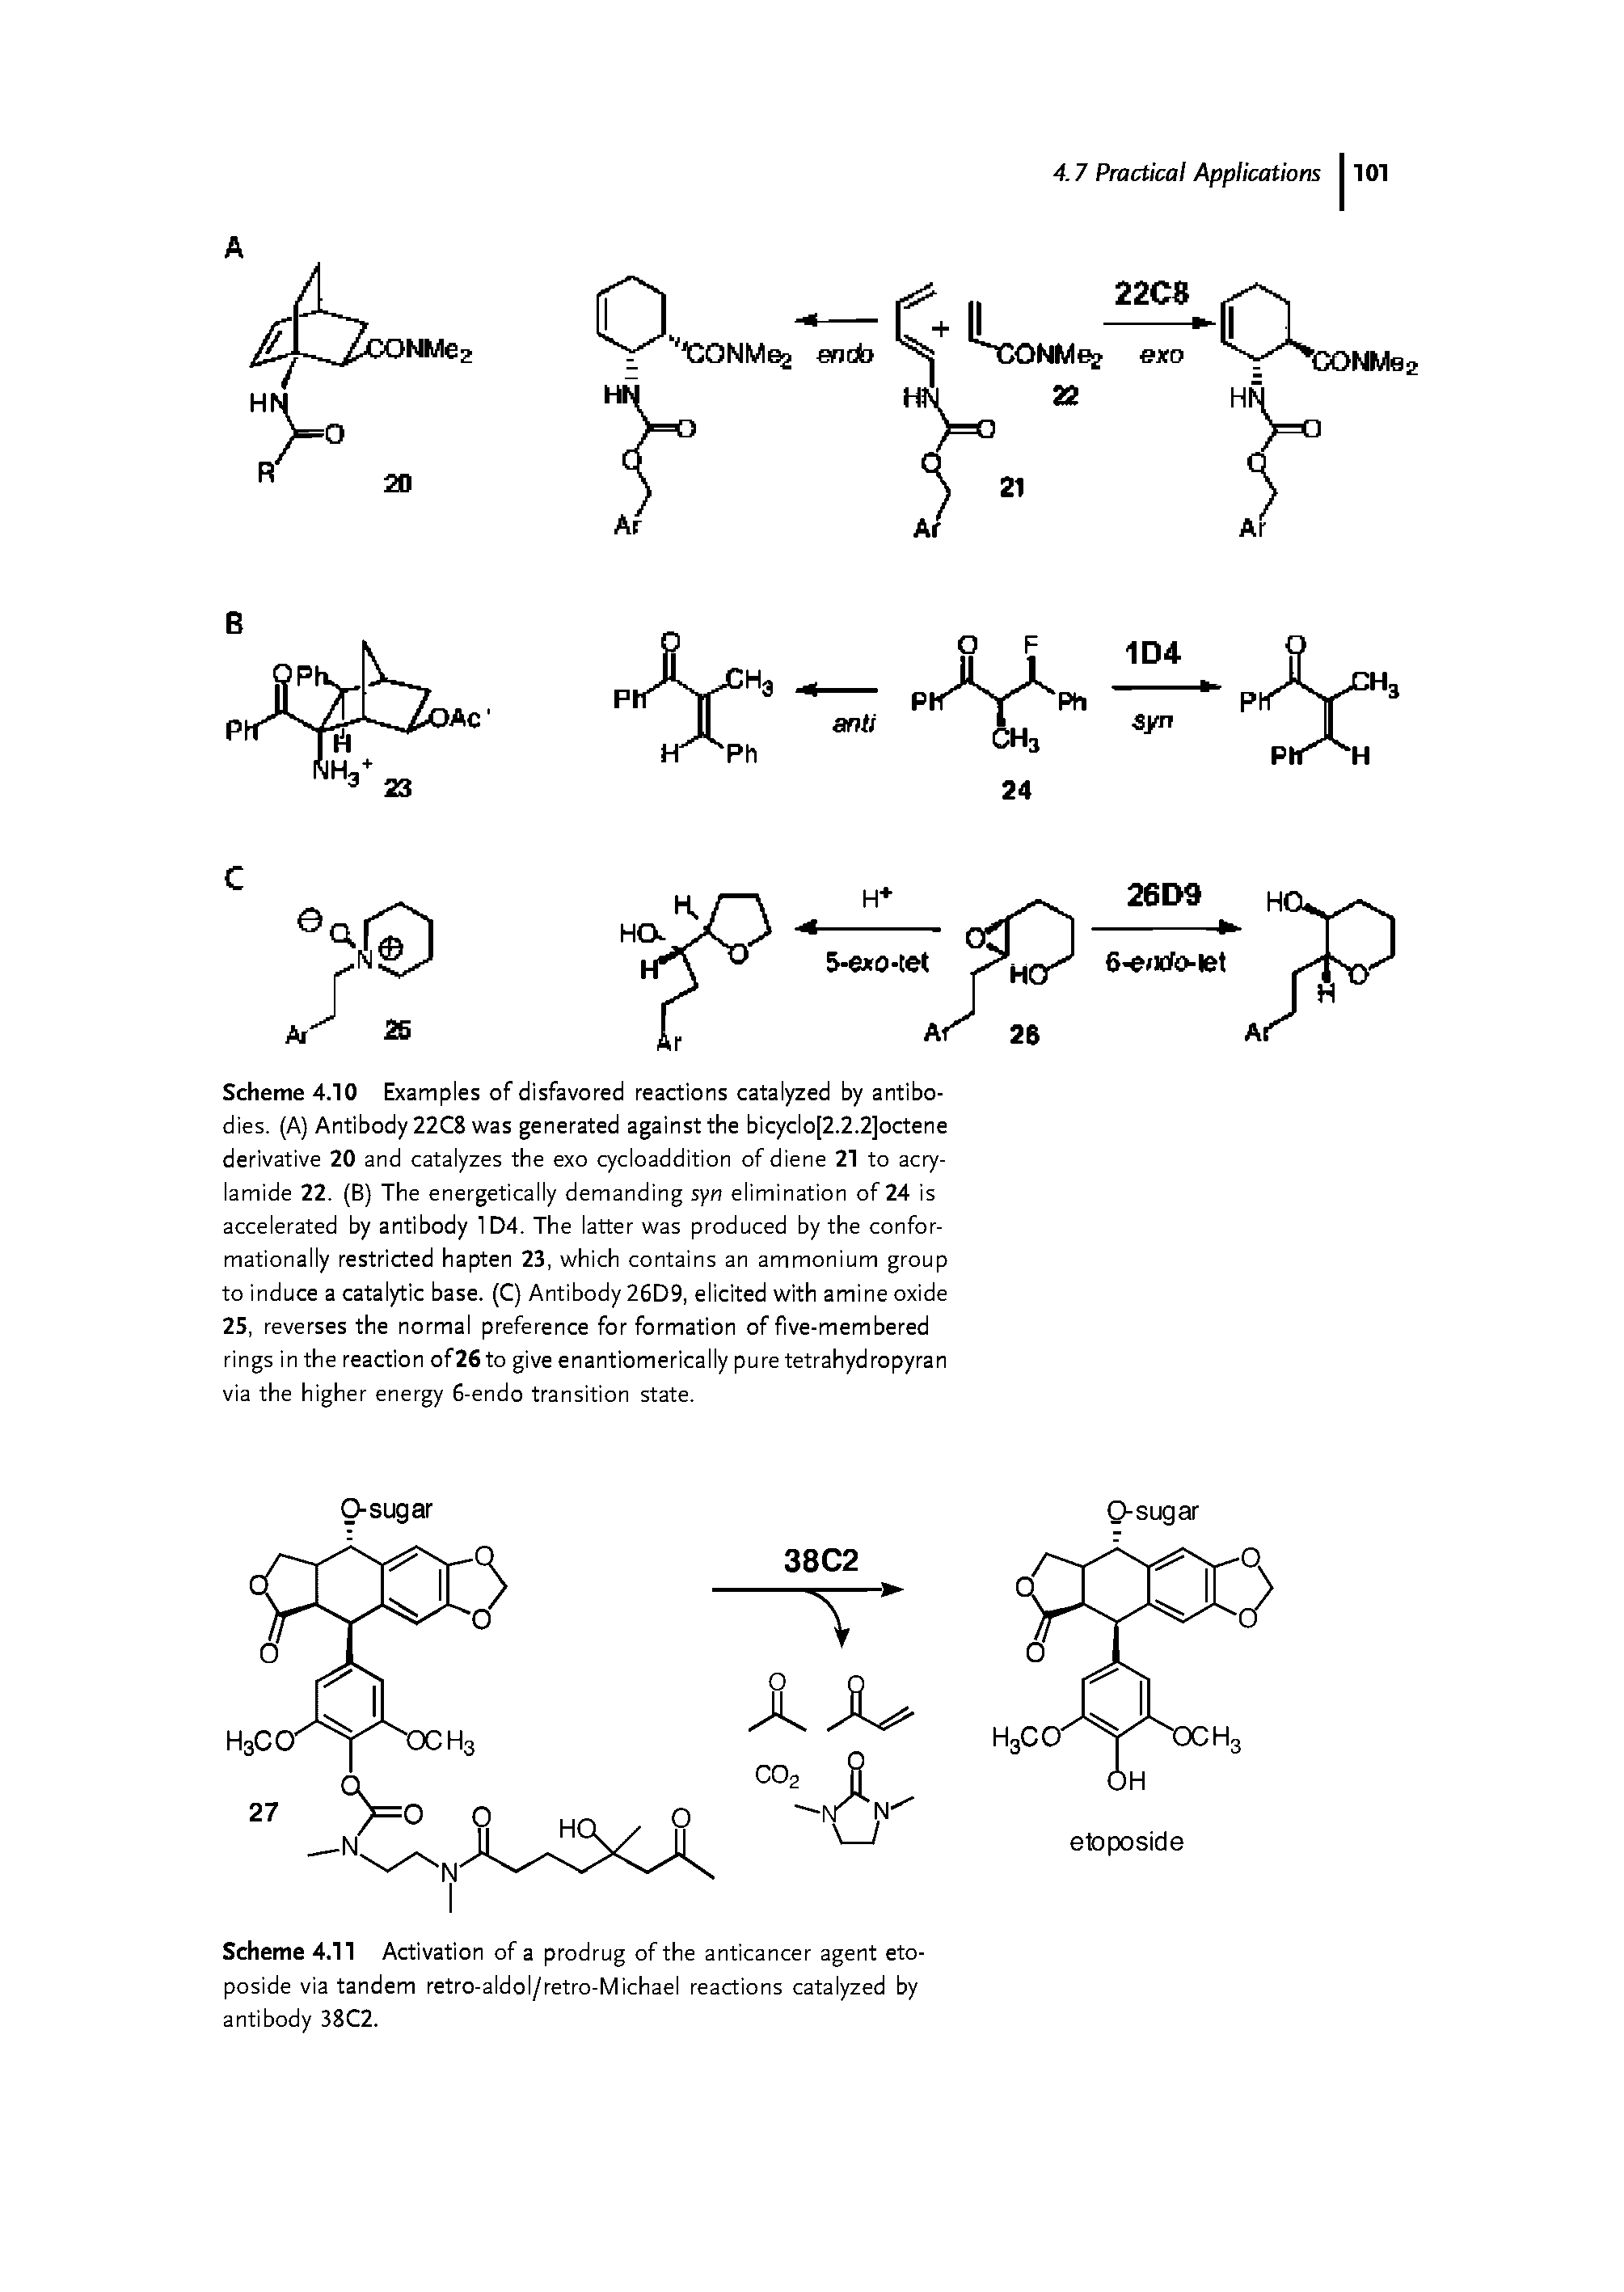 Scheme 4.11 Activation of a prodrug of the anticancer agent eto-poside via tandem retro-aldol/retro-Michael reactions catalyzed by antibody 38C2.